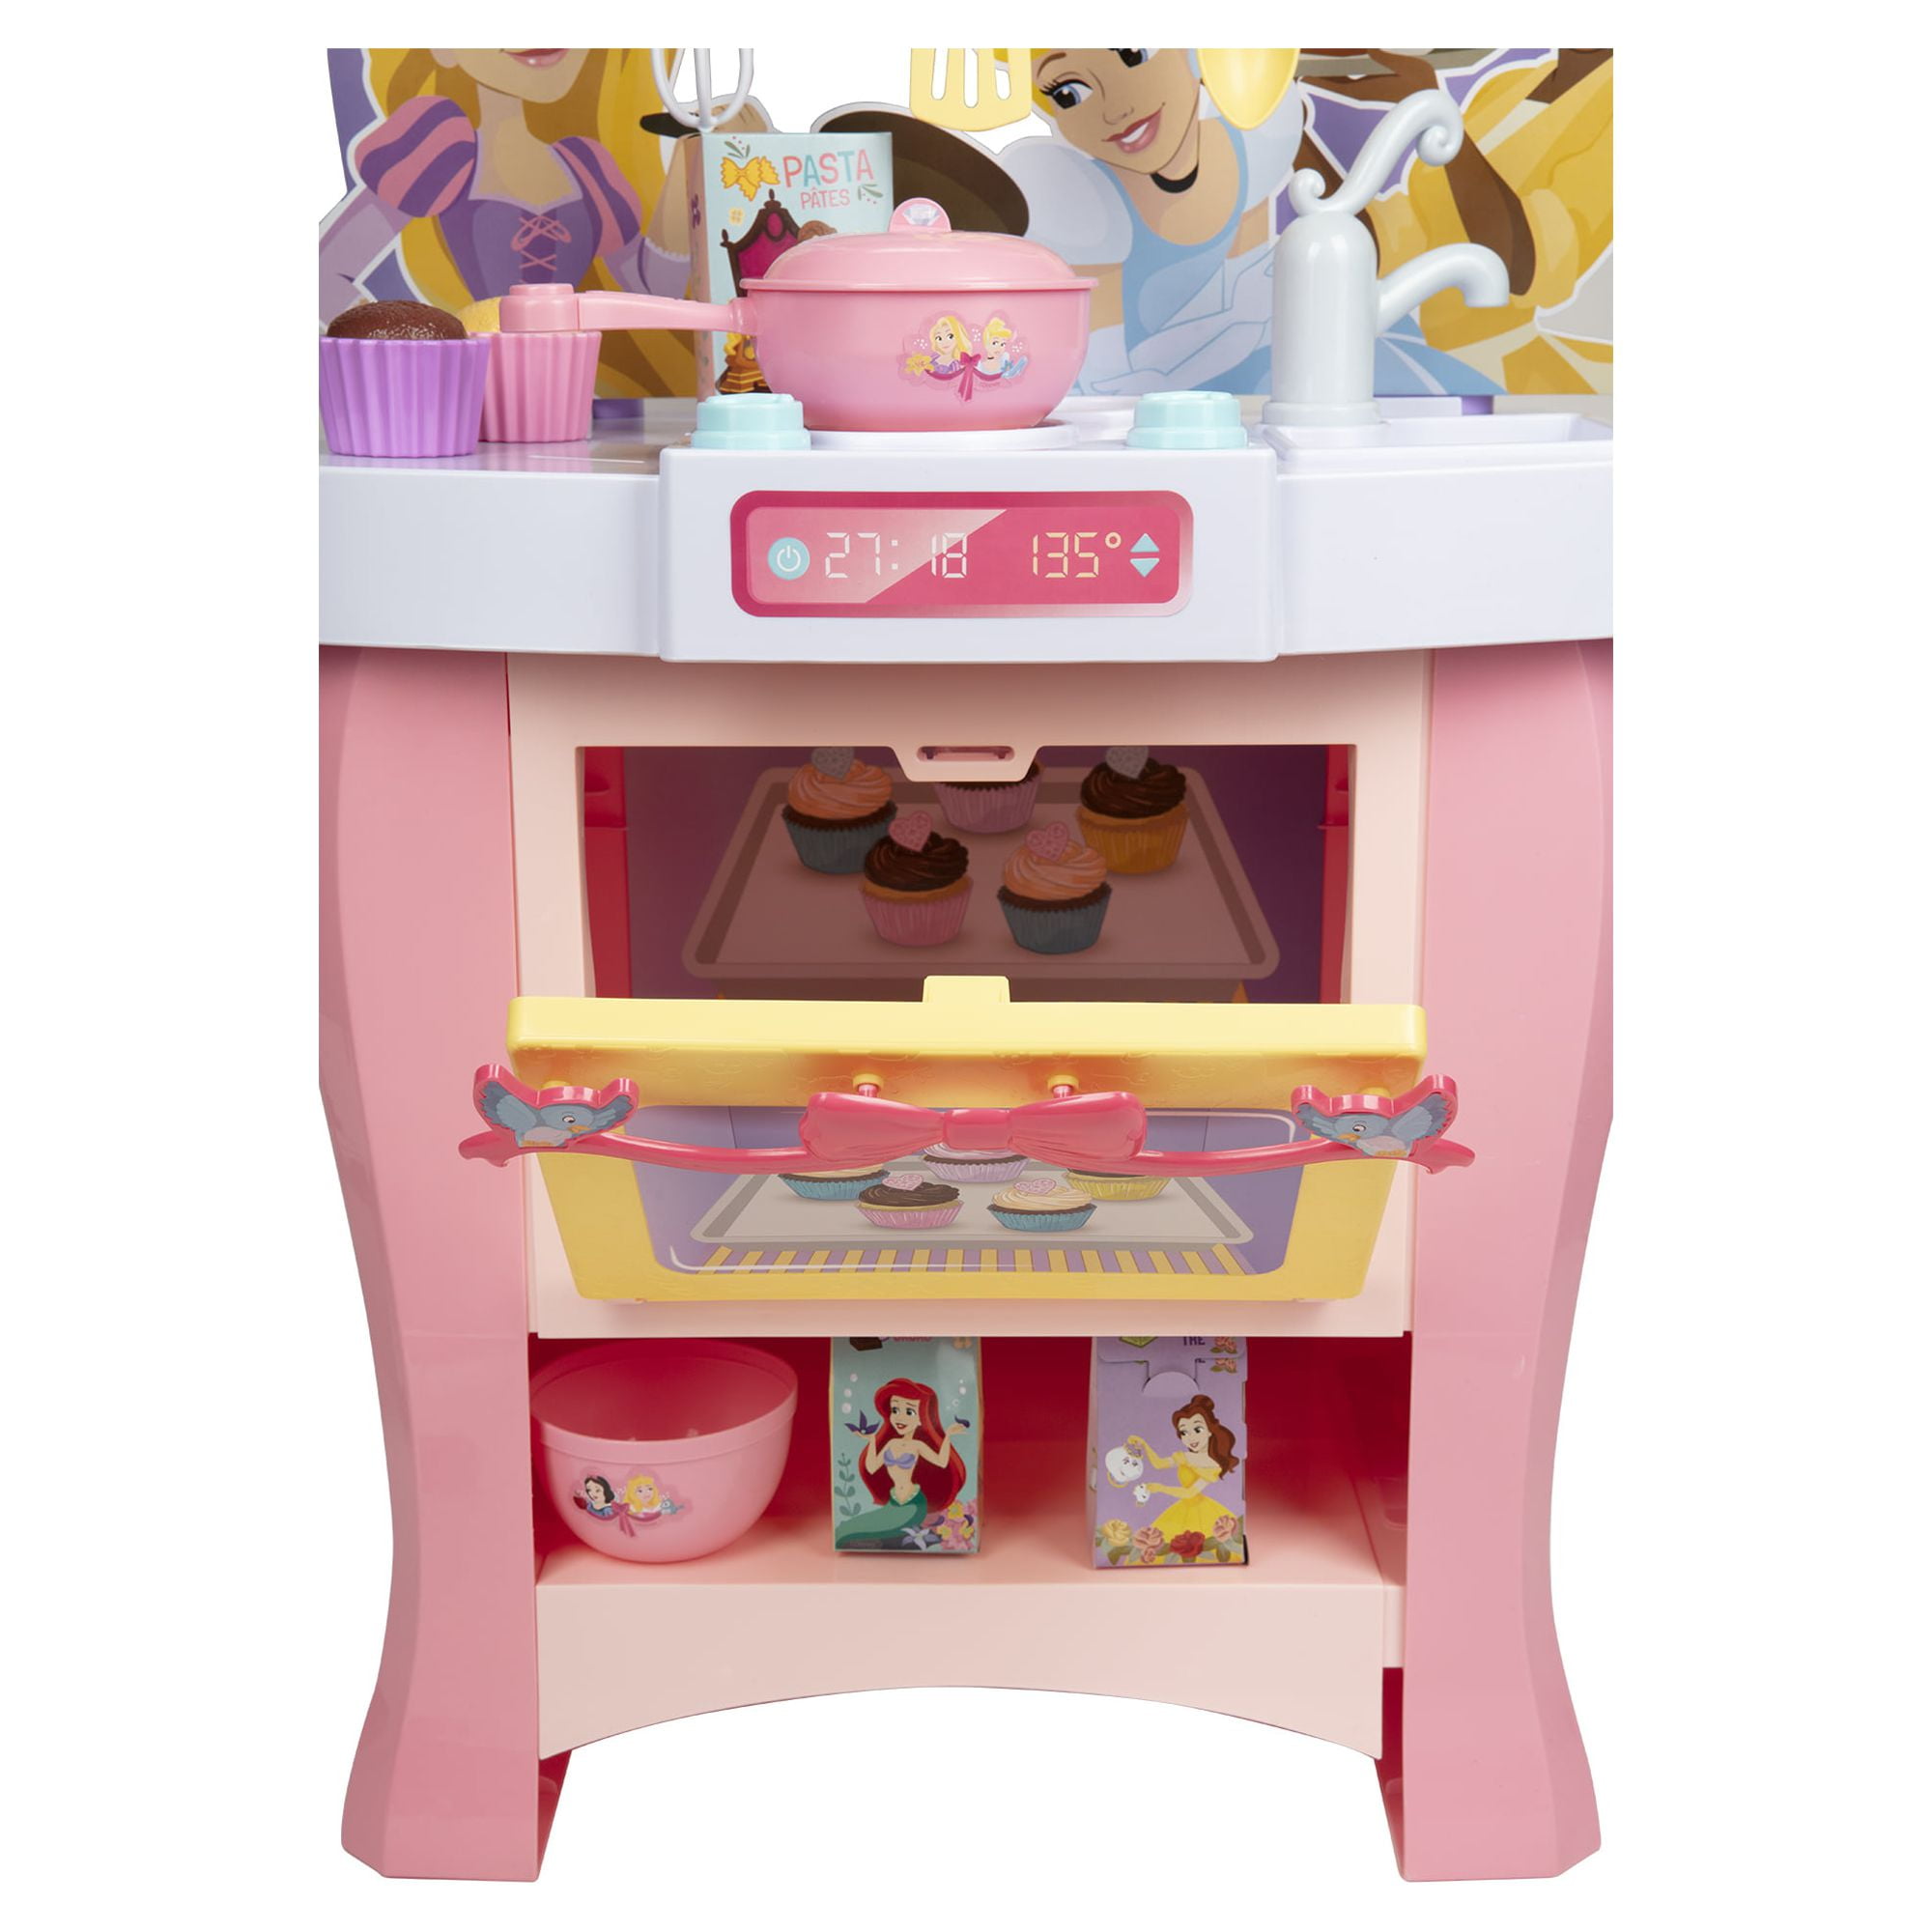 Plastic 44703 Disney Princess Kitchen Set, Child Age Group: 3+ Years